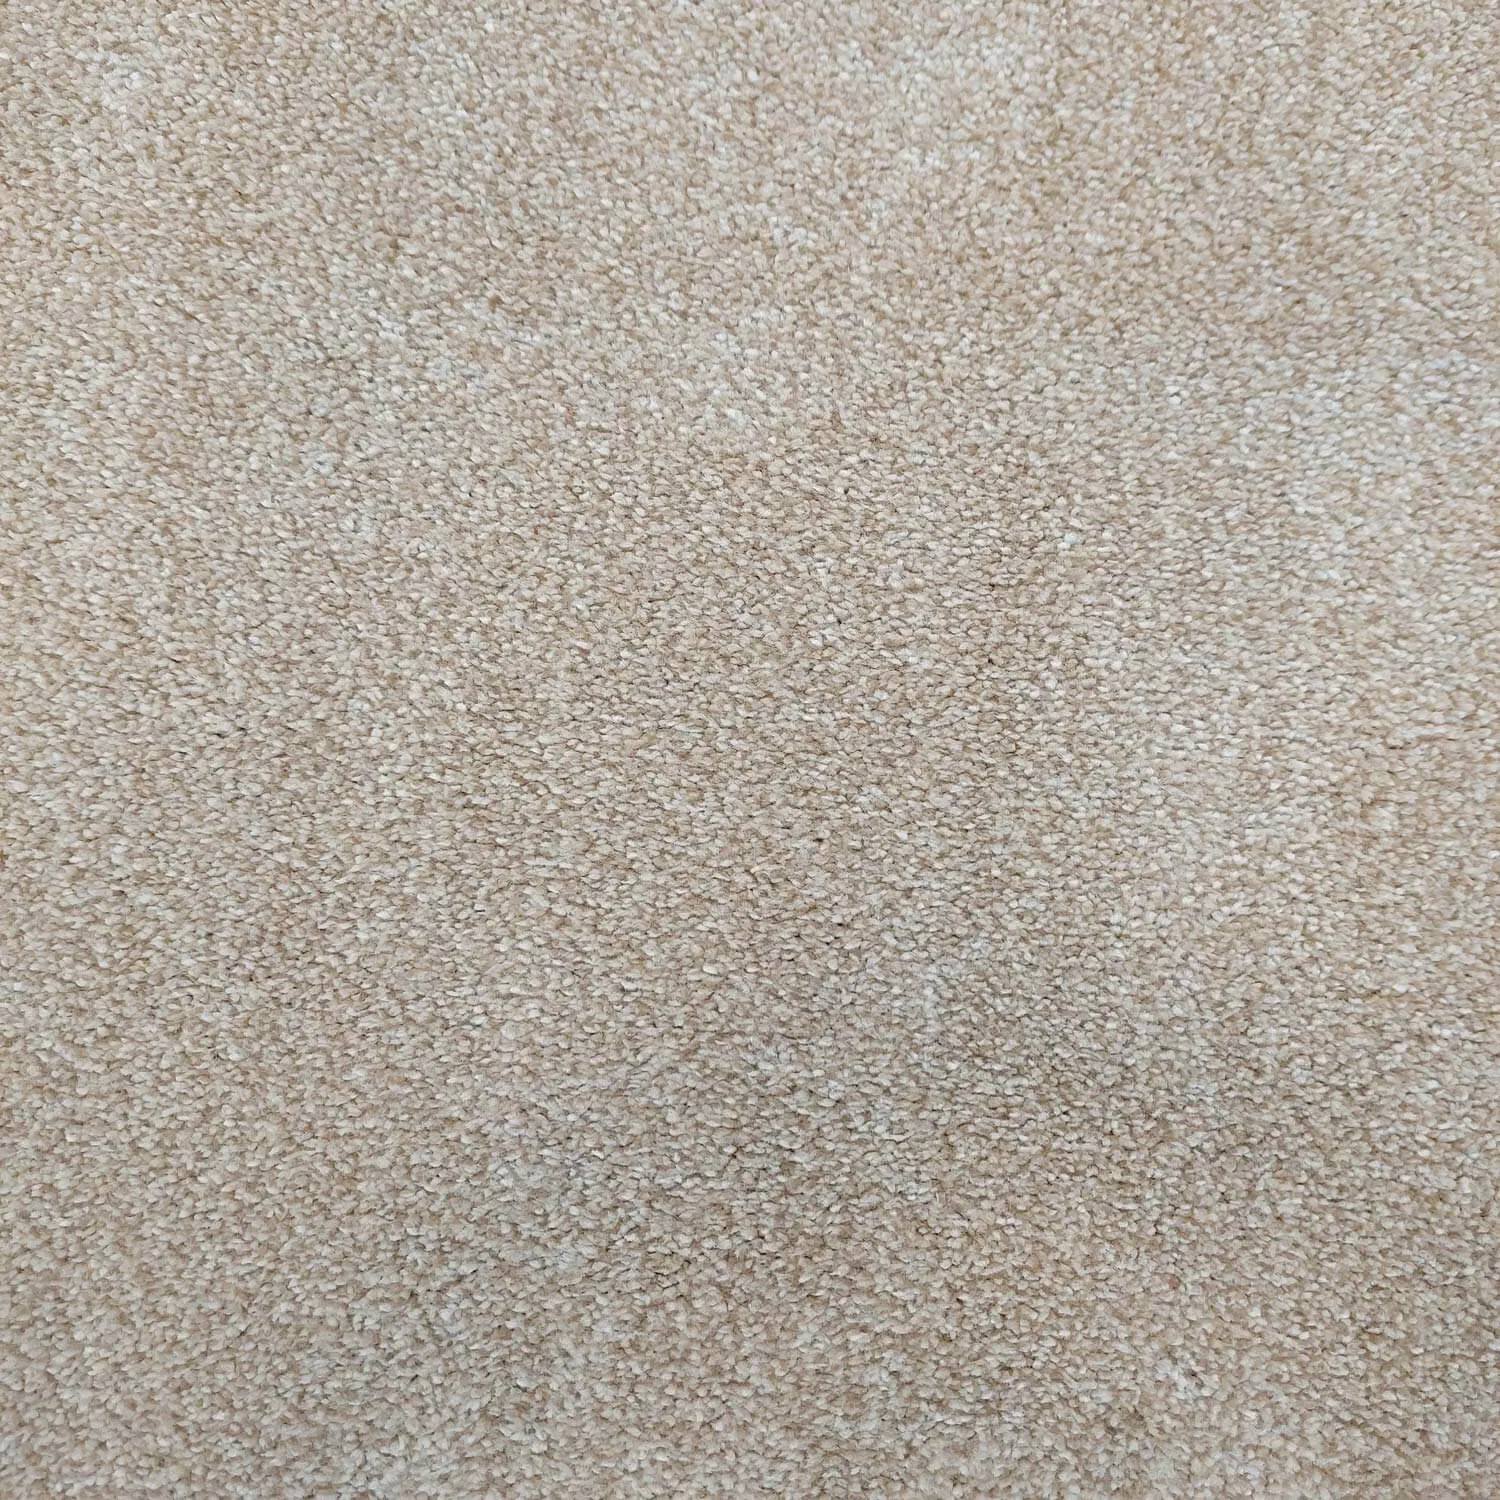 Caress Saxony Carpet - 672 Limestone